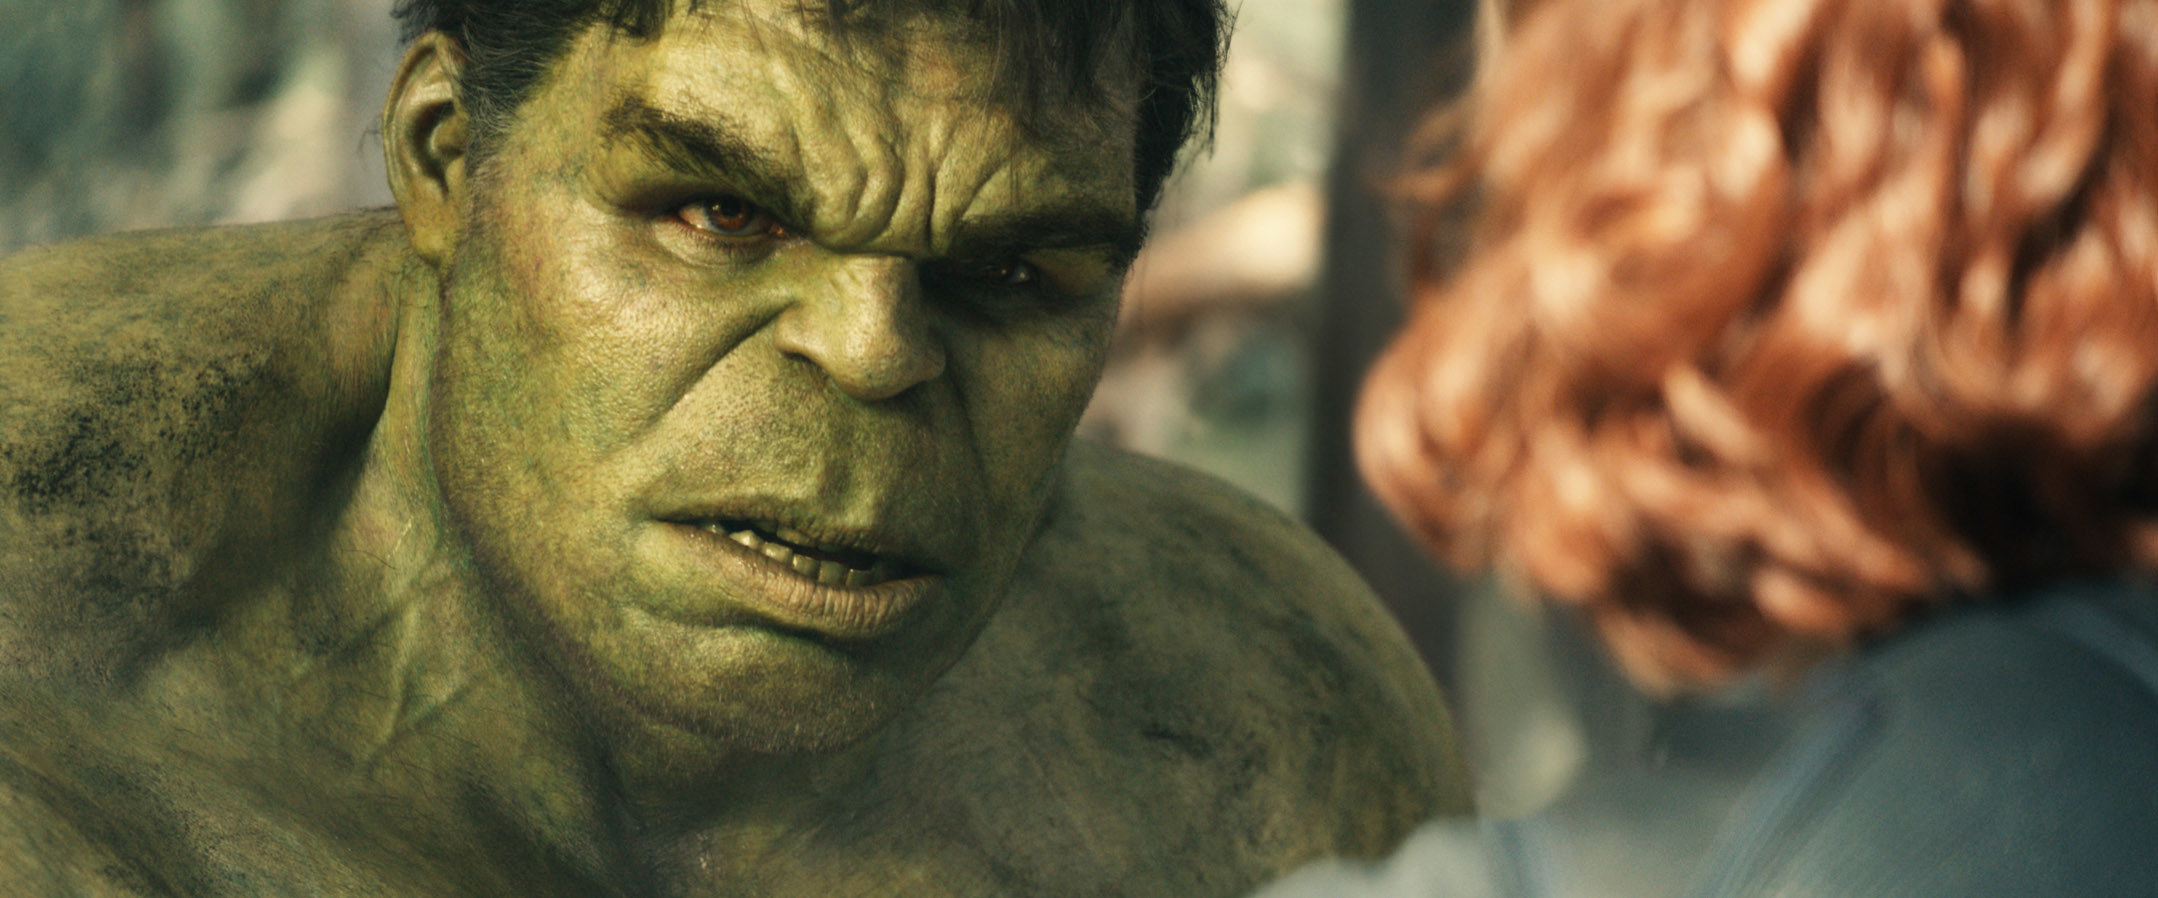 The Hulk in Age of Ultron